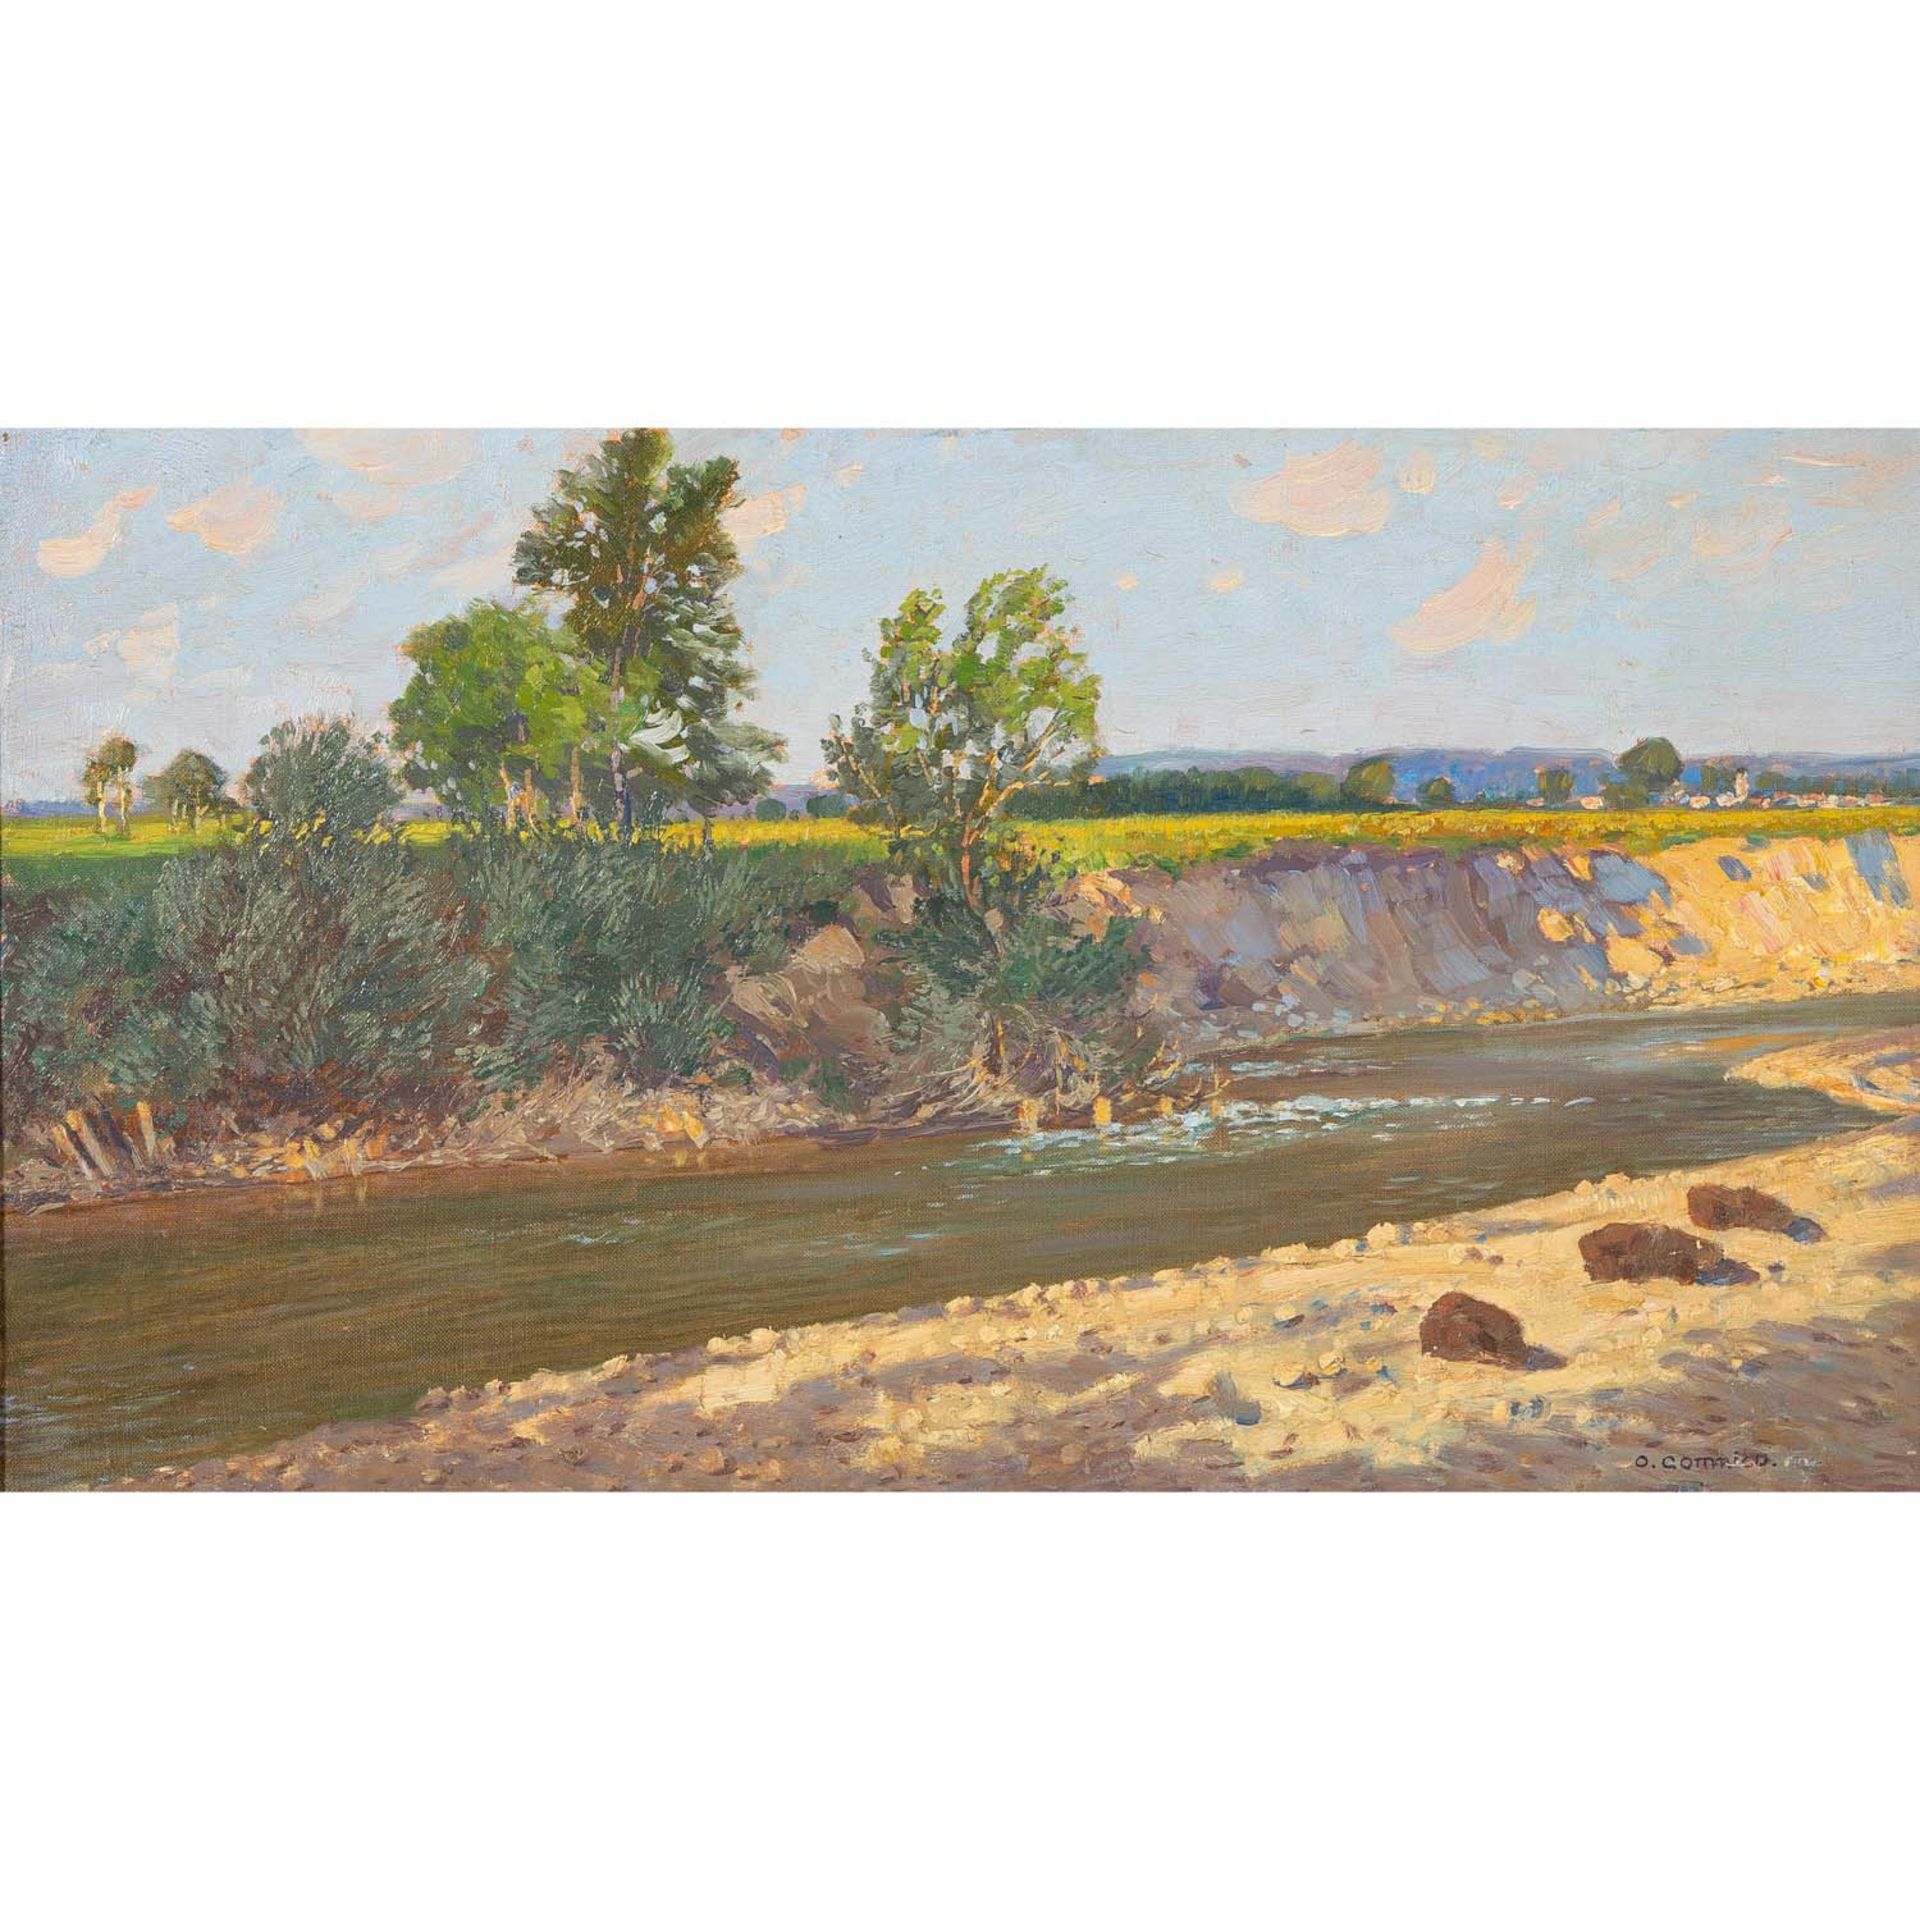 GOTTFRIED, OSWALD (1869-1949) "Flusslandschaft im Sonnenlicht"